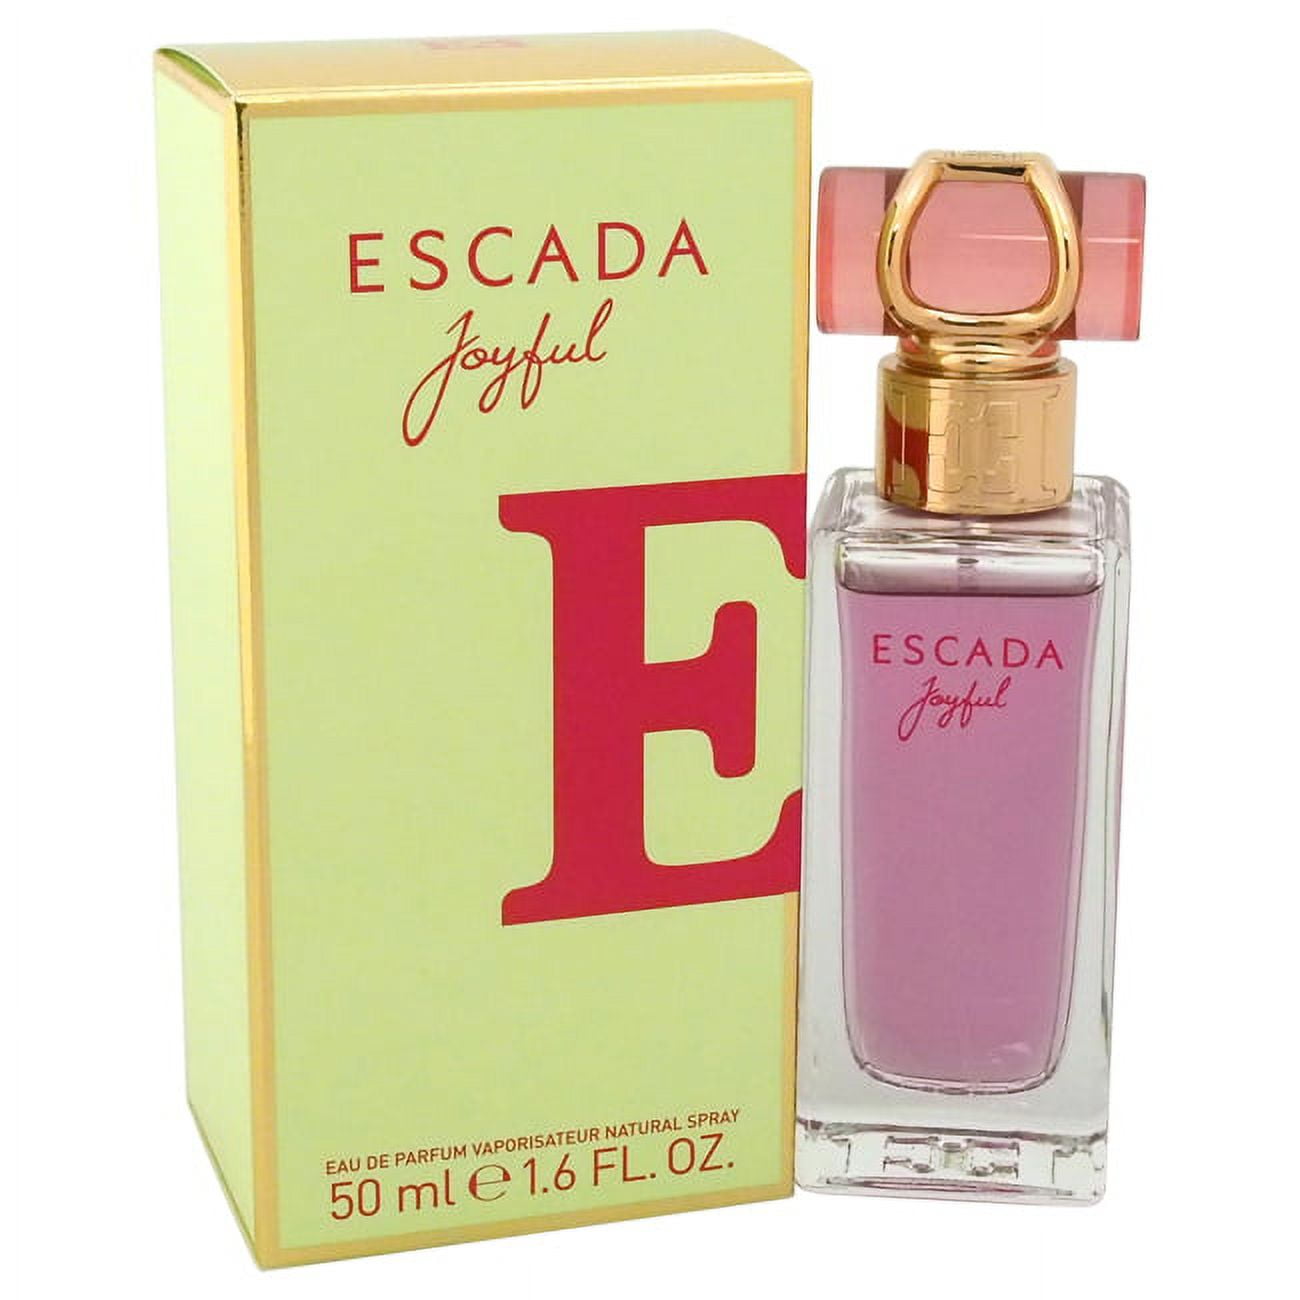 Escada Joyful Eau de Parfum, Perfume for Women, 1.6 Oz - Walmart.com